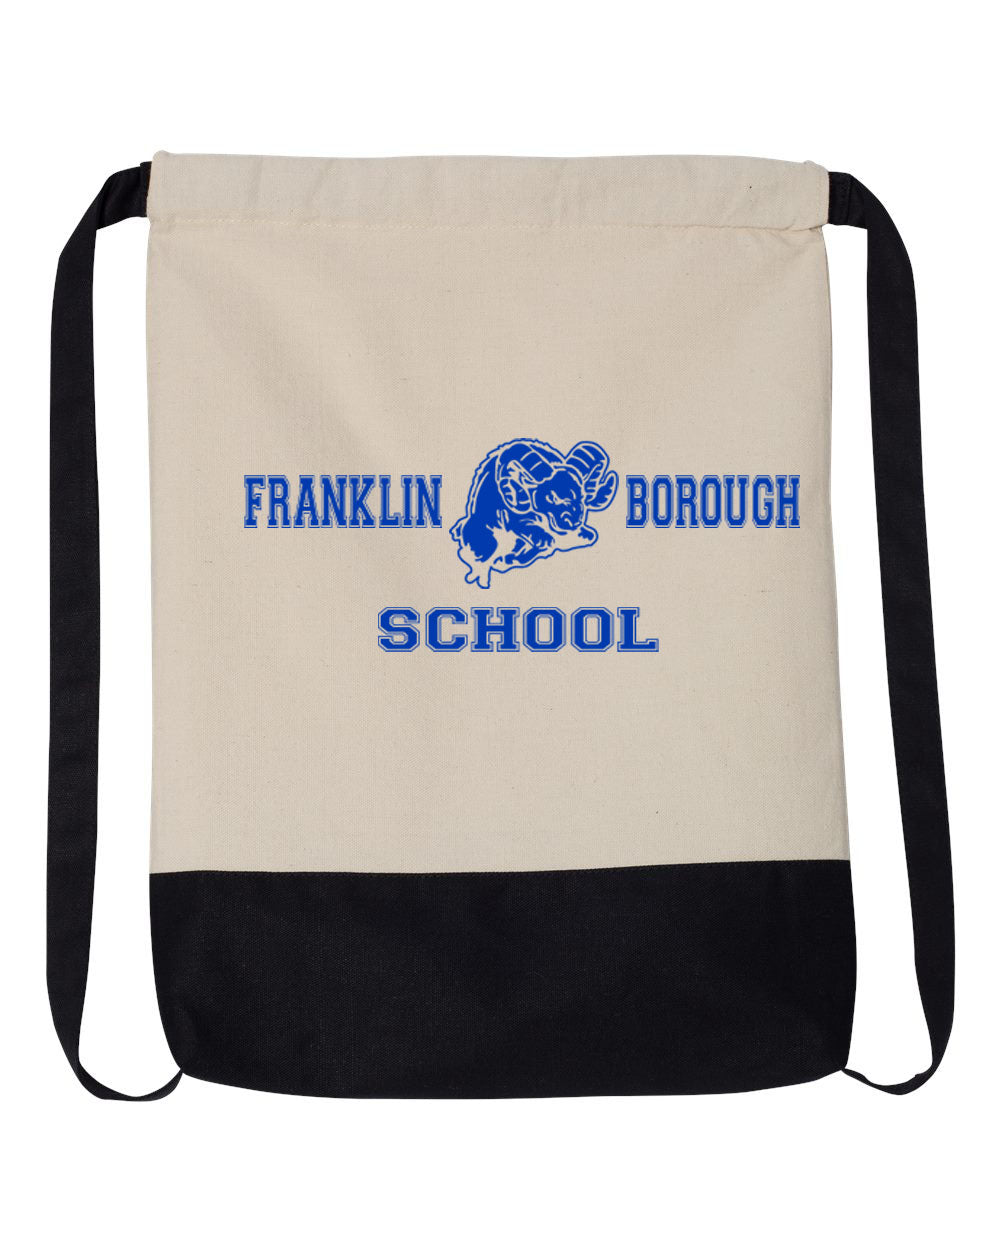 Franklin School design 3 Drawstring Bag